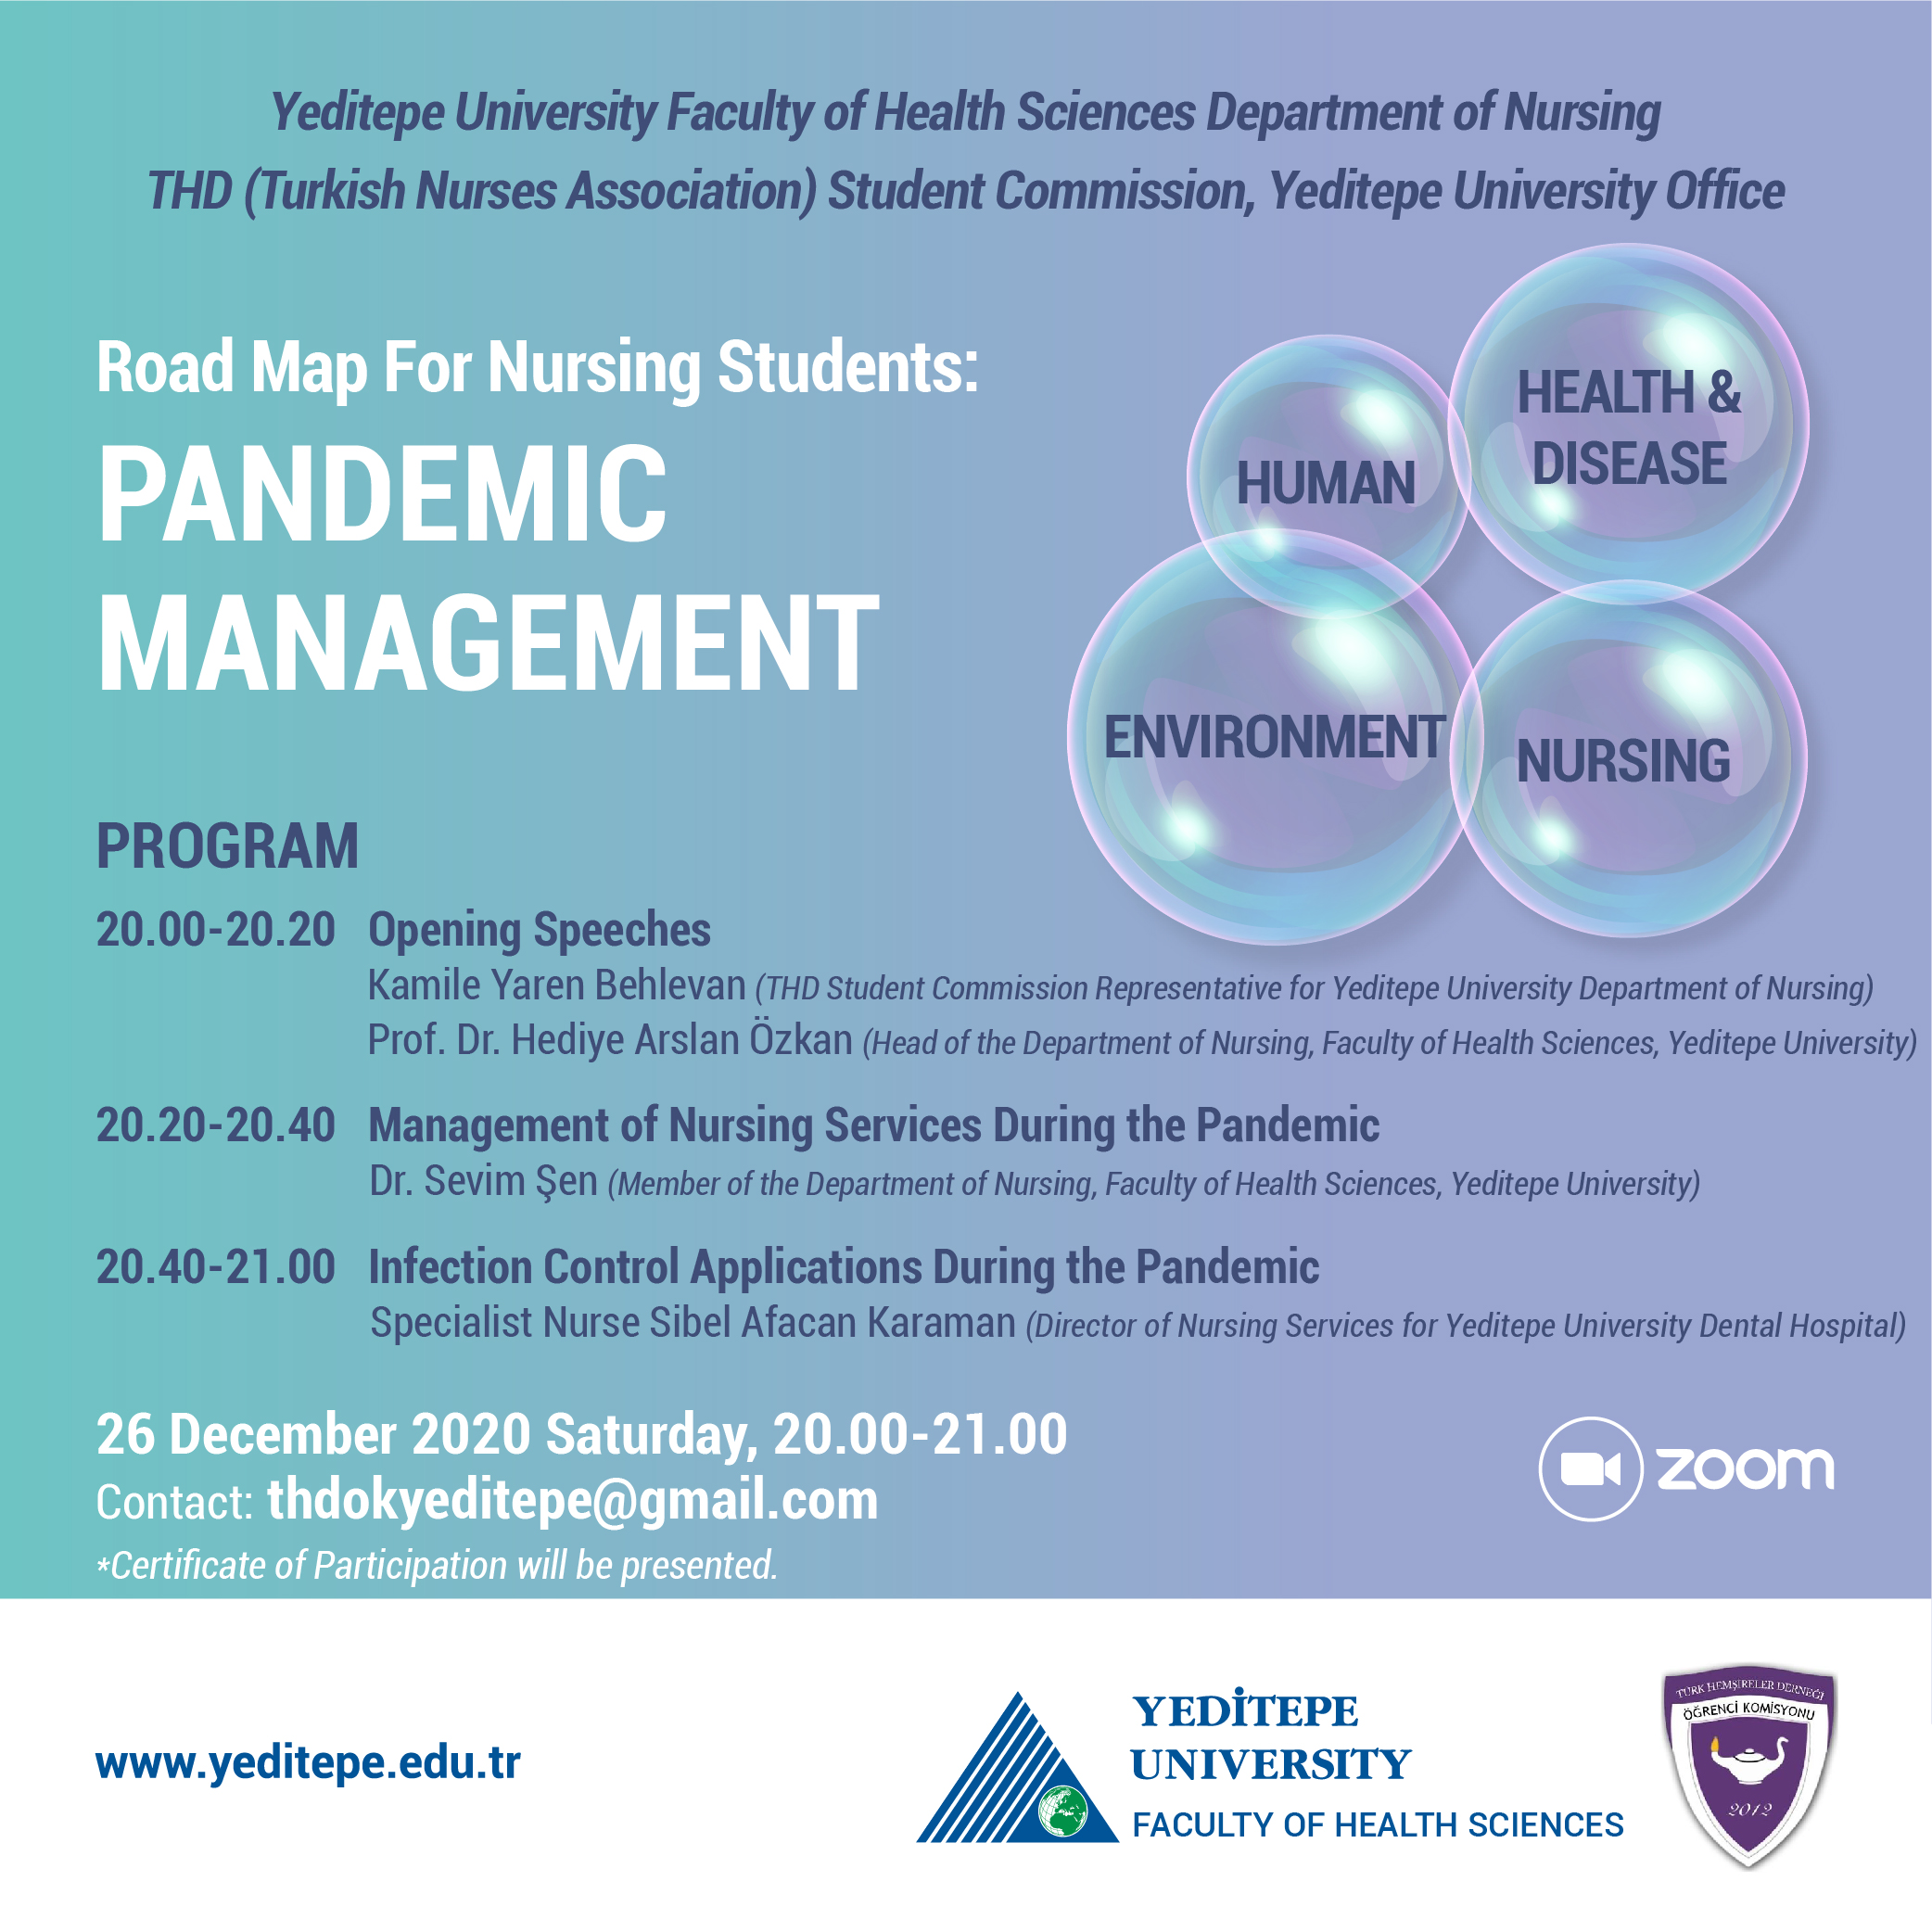 Road Map For Nursing Students: Pandemic Management